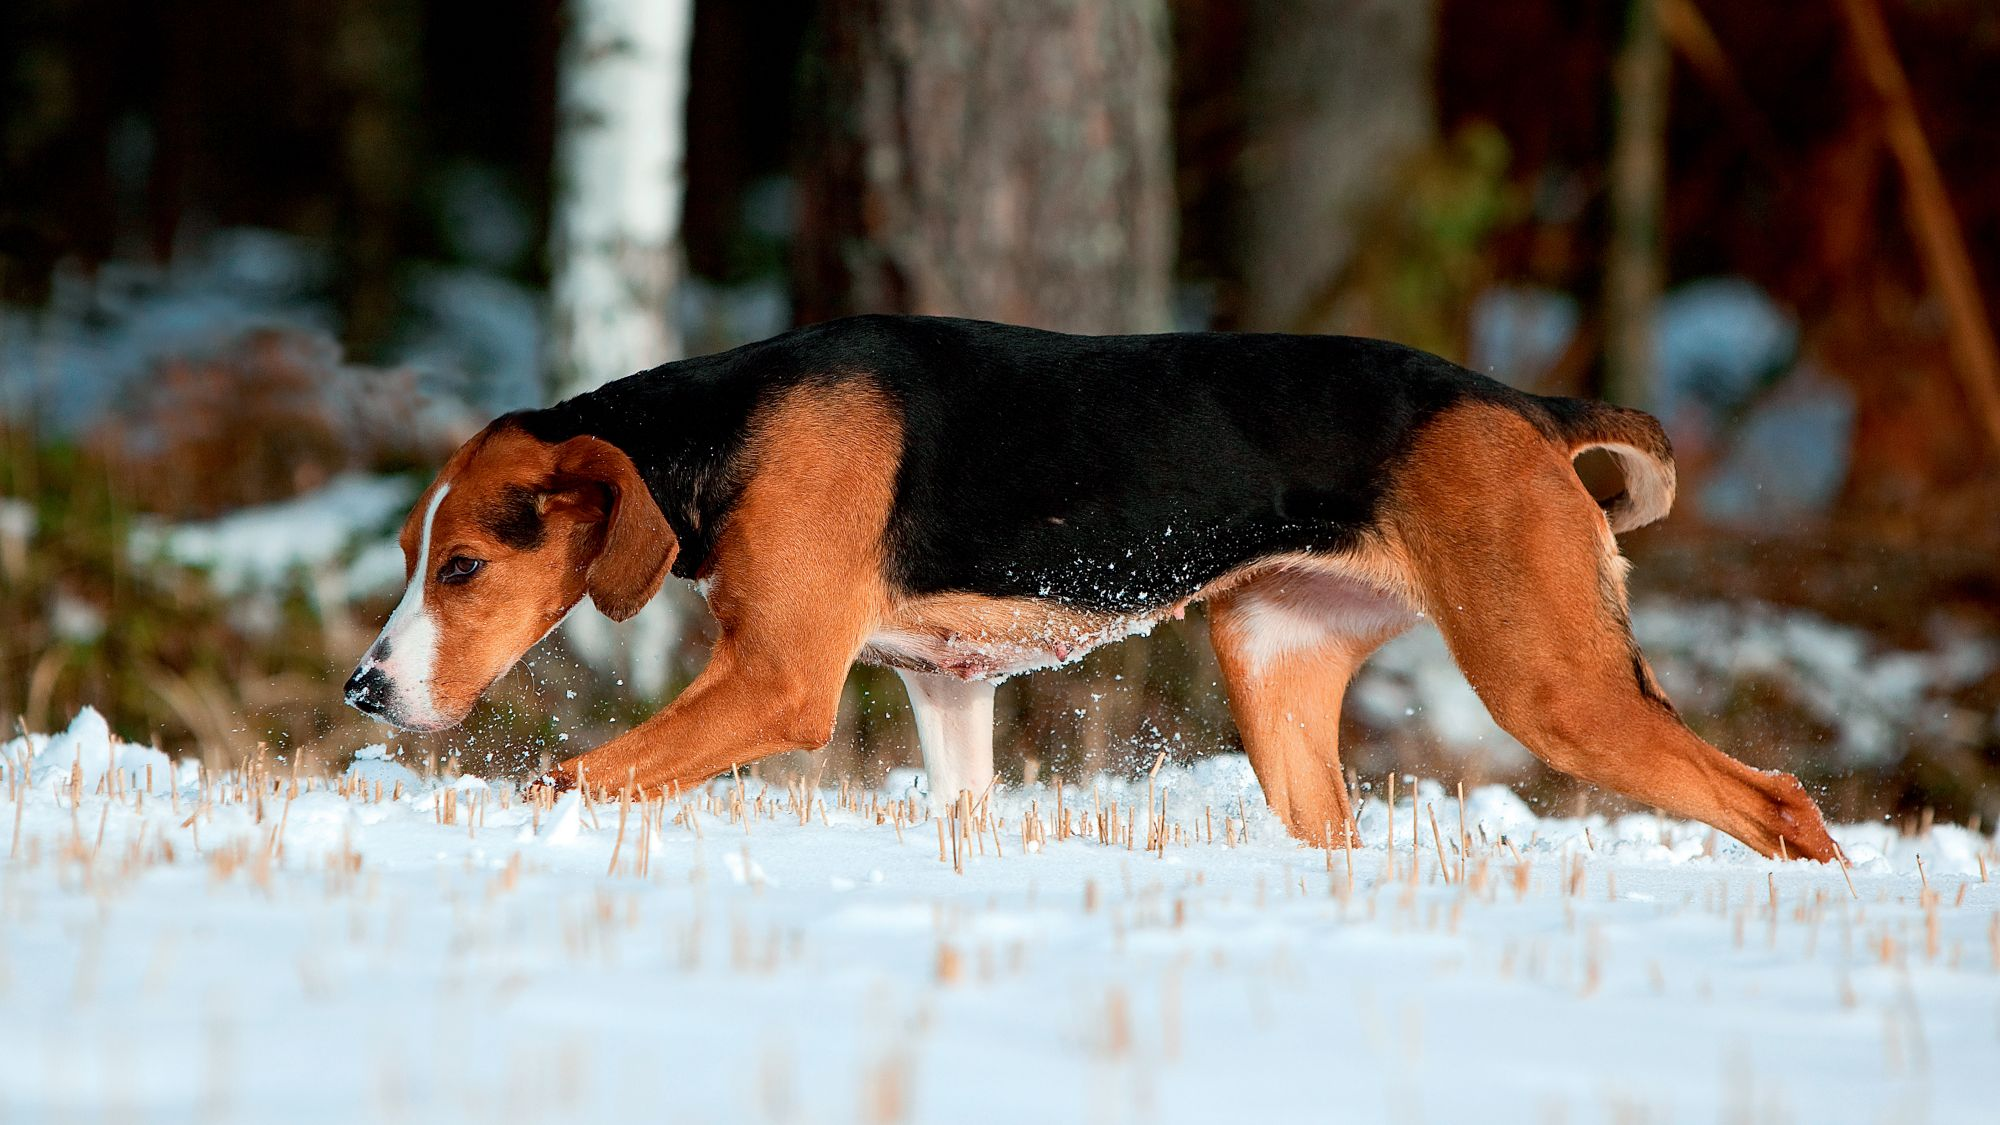 Finnish Hound sniffing along snowy ground